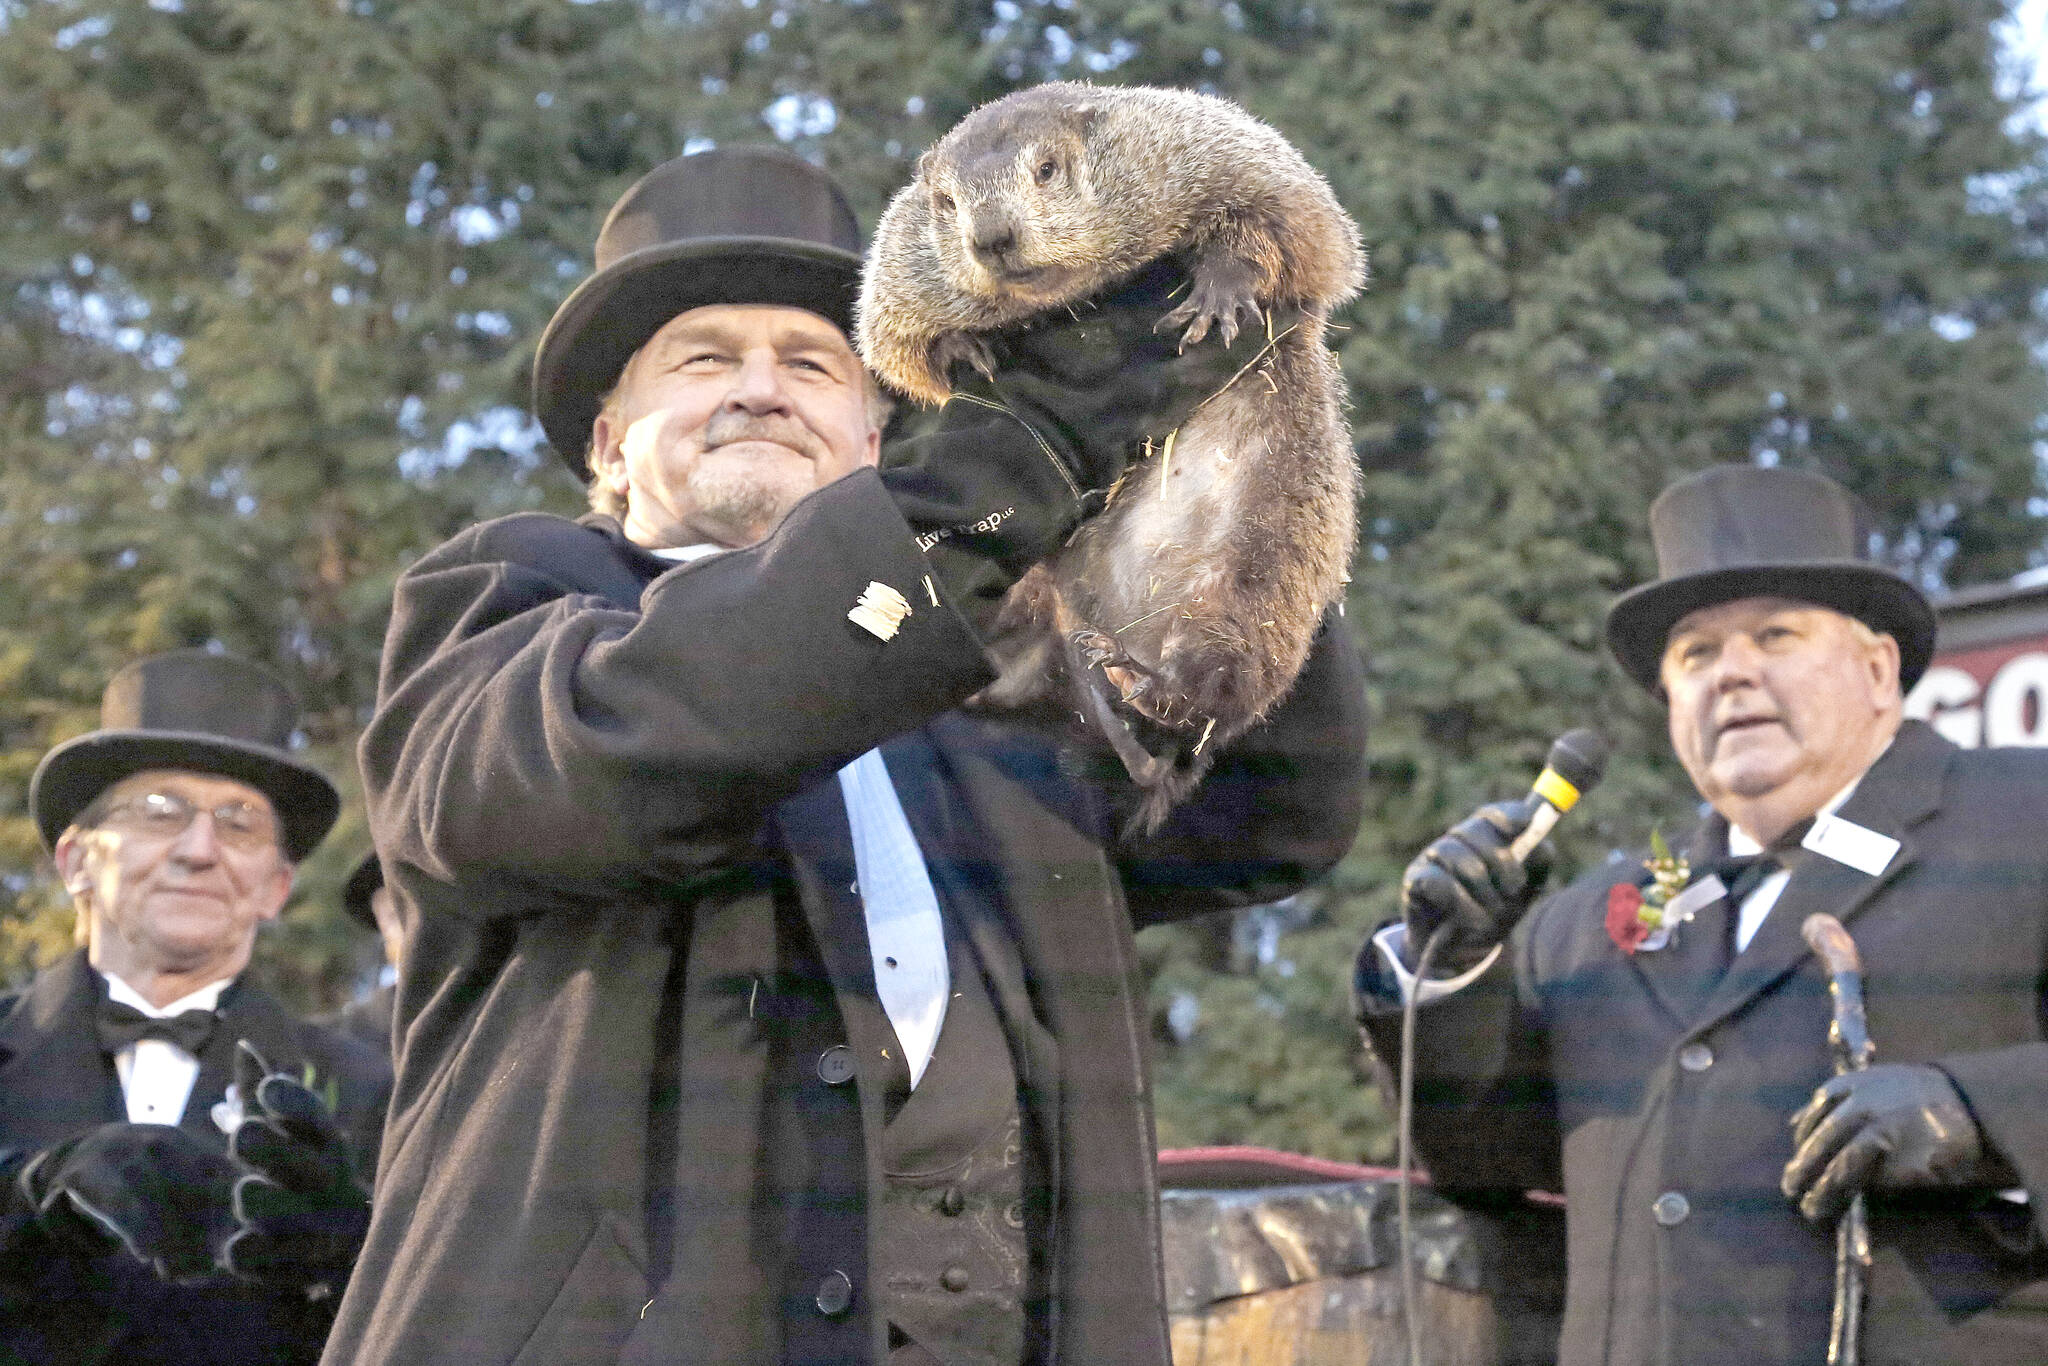 Groundhog Club handler John Griffiths, center, holds Punxsutawney Phil, the weather prognosticating groundhog, during the 131st celebration of Groundhog Day on Gobbler’s Knob in Punxsutawney, Pa., Thursday, Feb. 2, 2017. . (AP Photo/Gene J. Puskar)